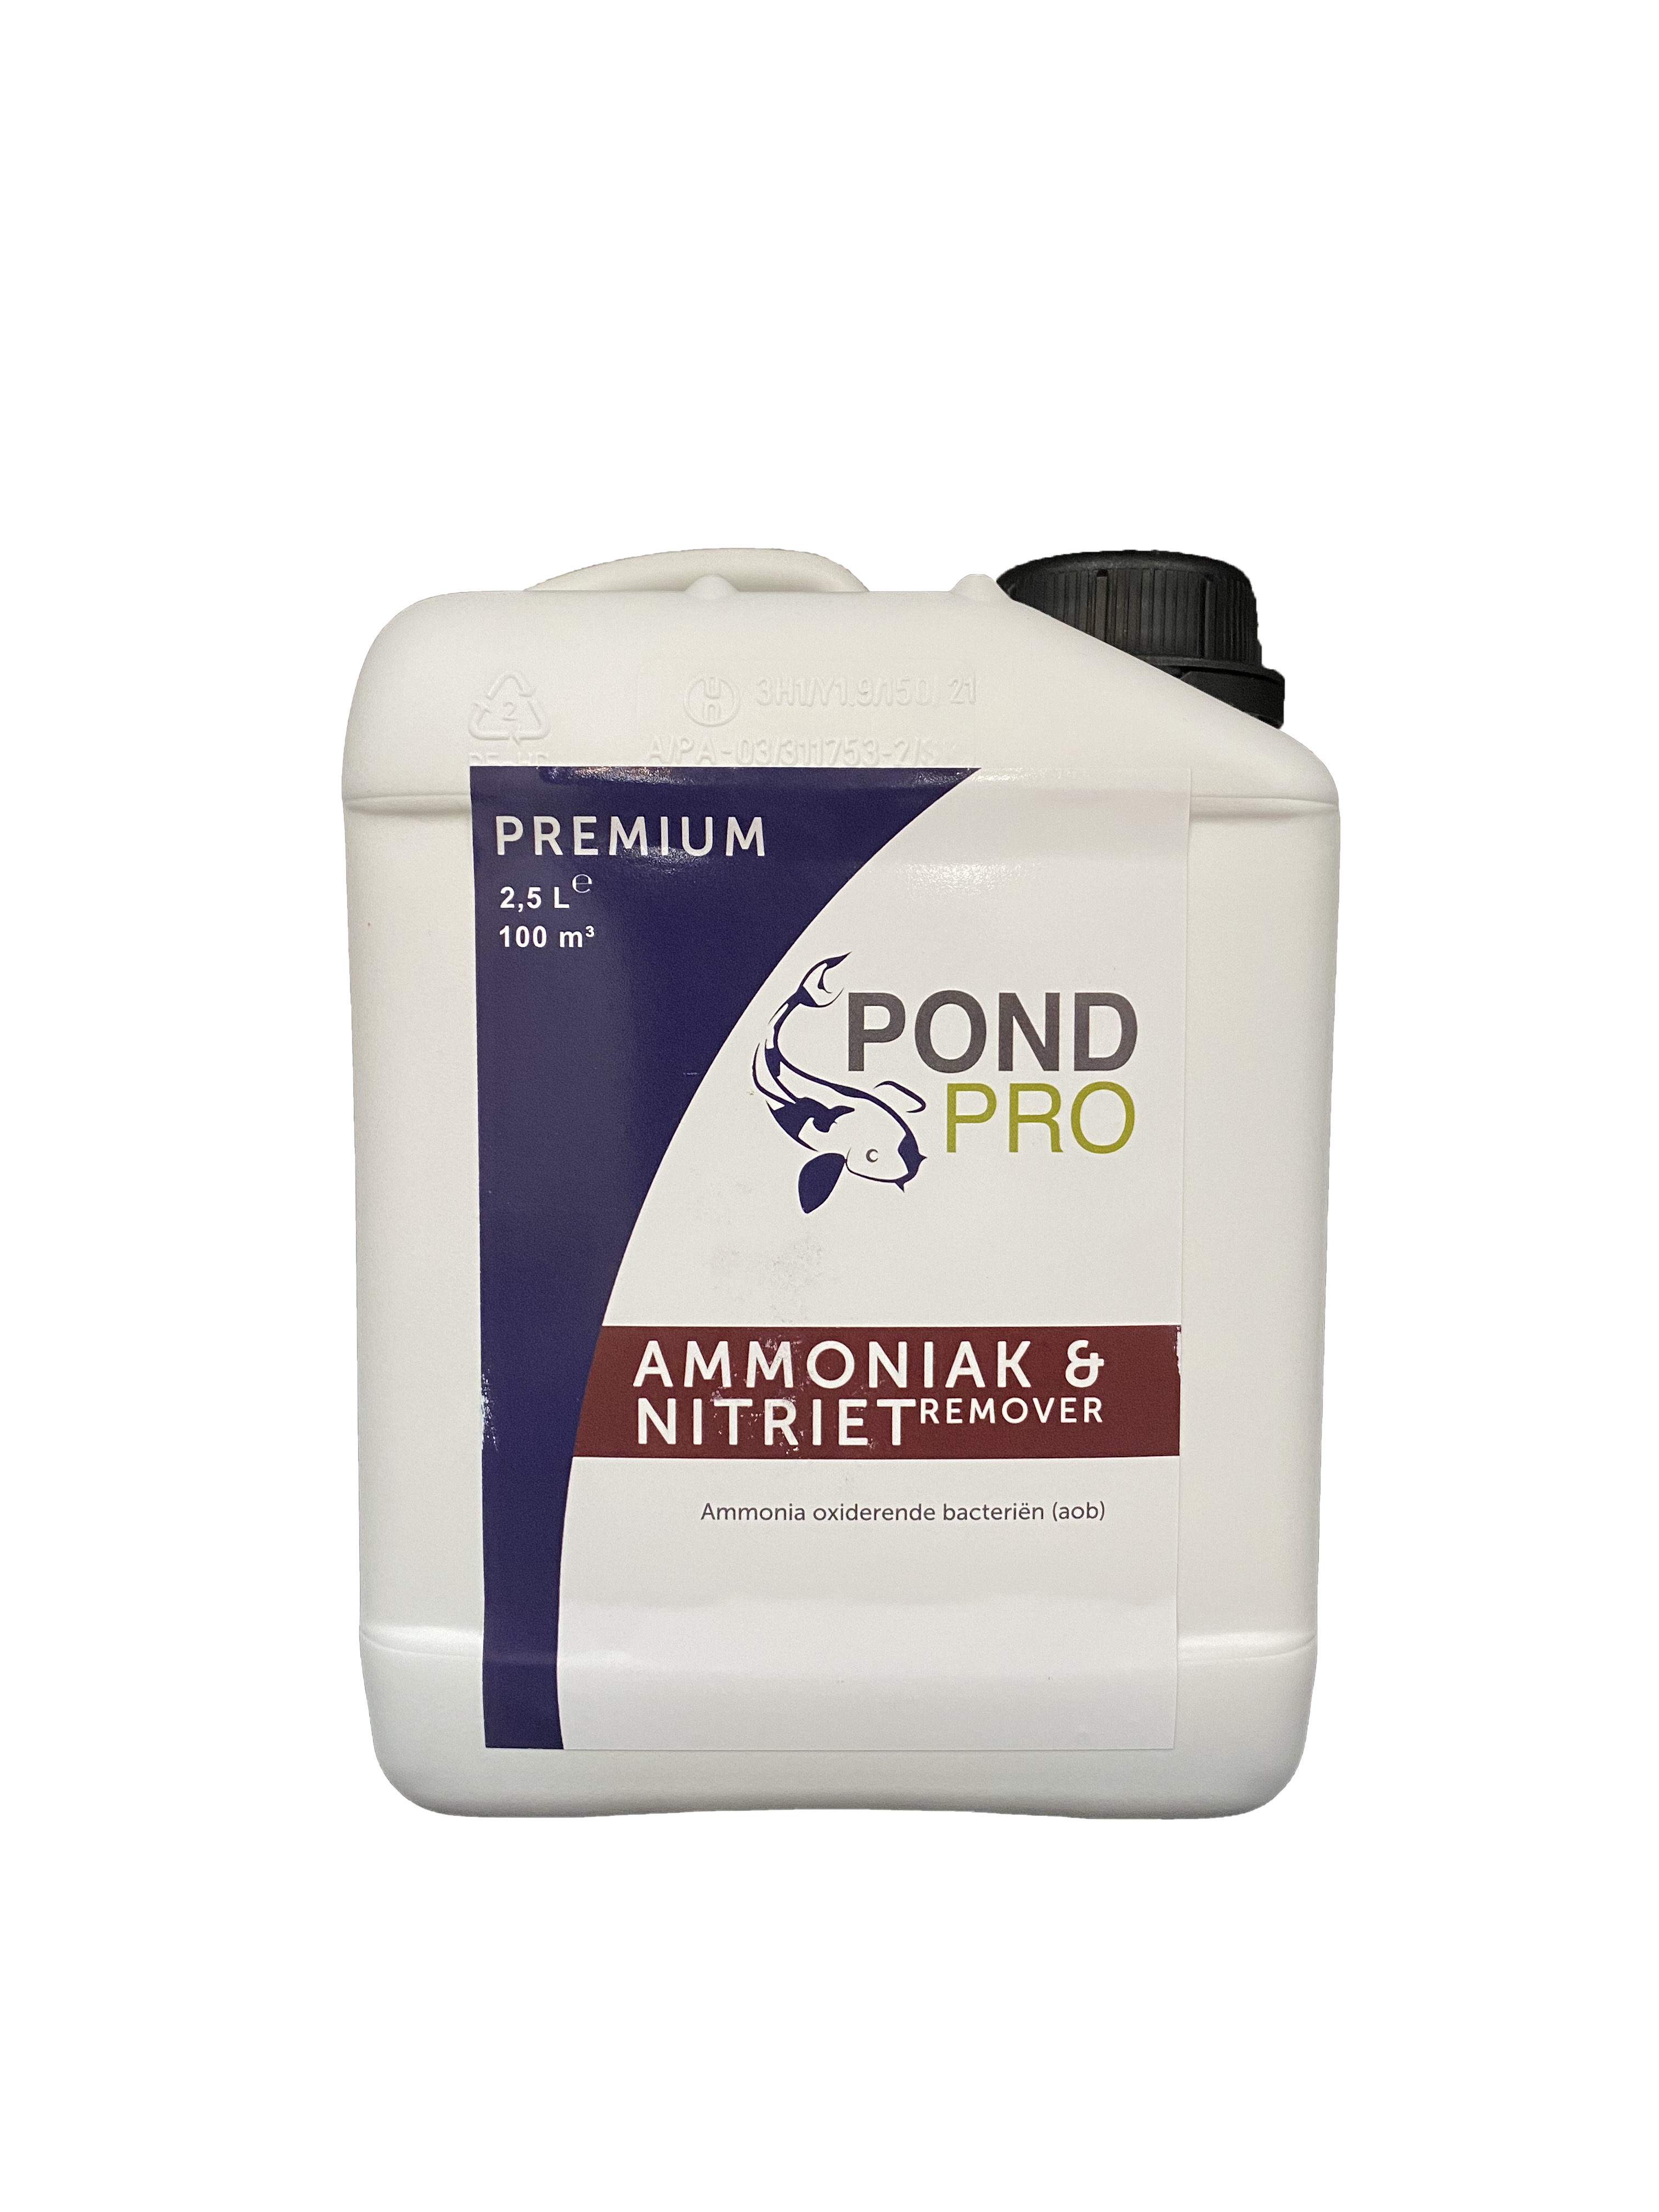 Premium Ammoniak & nitriet remover 2,5 liter